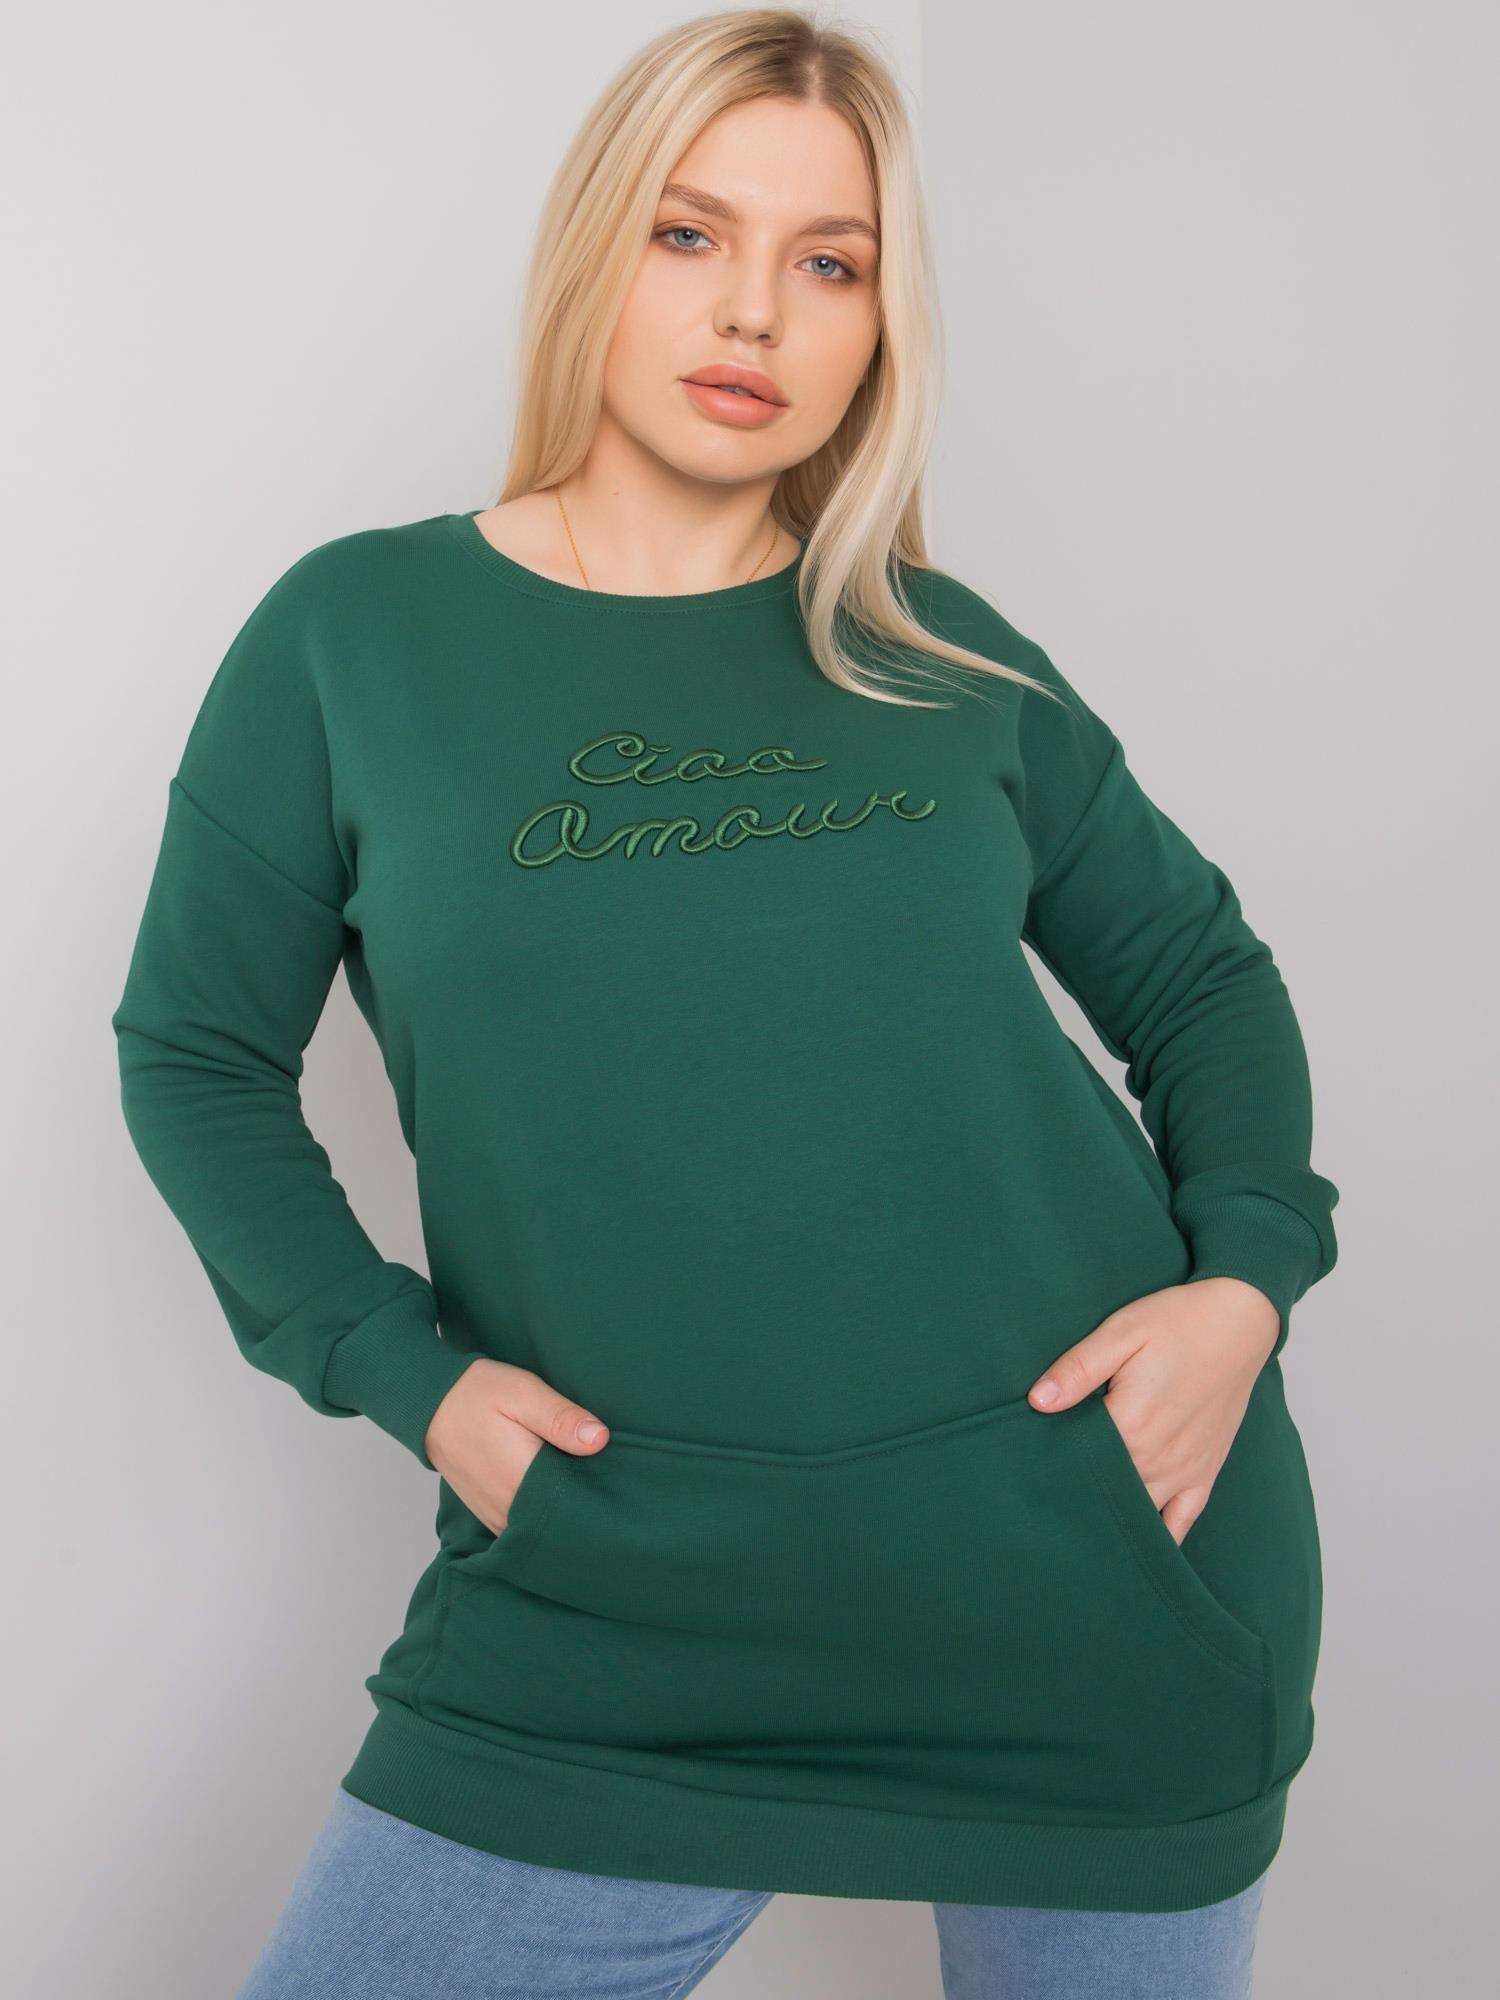 Dark green sweatshirt plus sizes